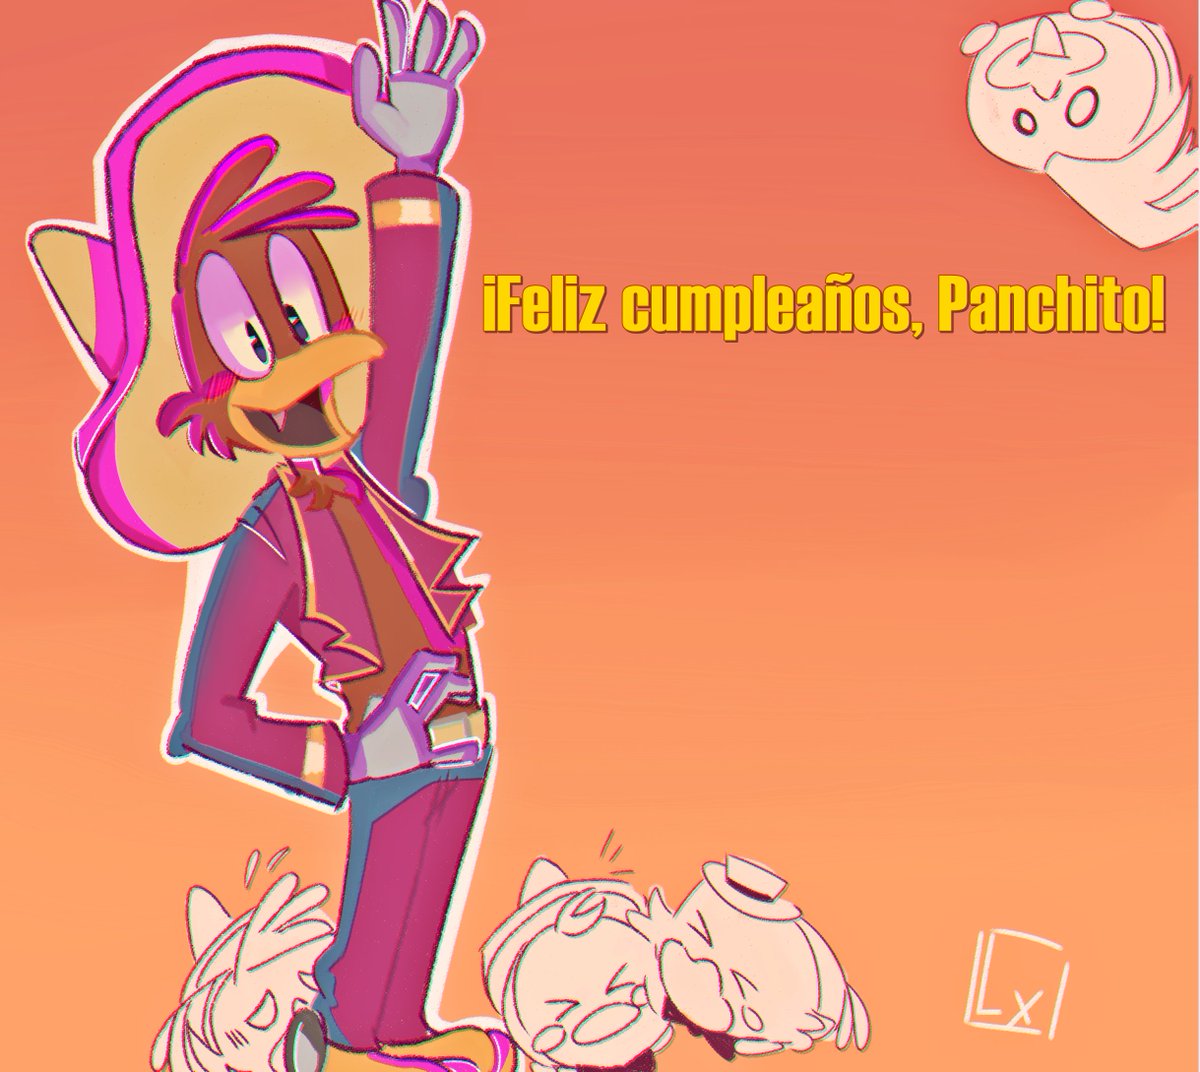 ¡Feliz cumpleaños, Panchito! and happy anniversary for The Three Caballeros movie! 

#PanchitoPistoles #TheThreeCaballeros #LosTresCaballeros